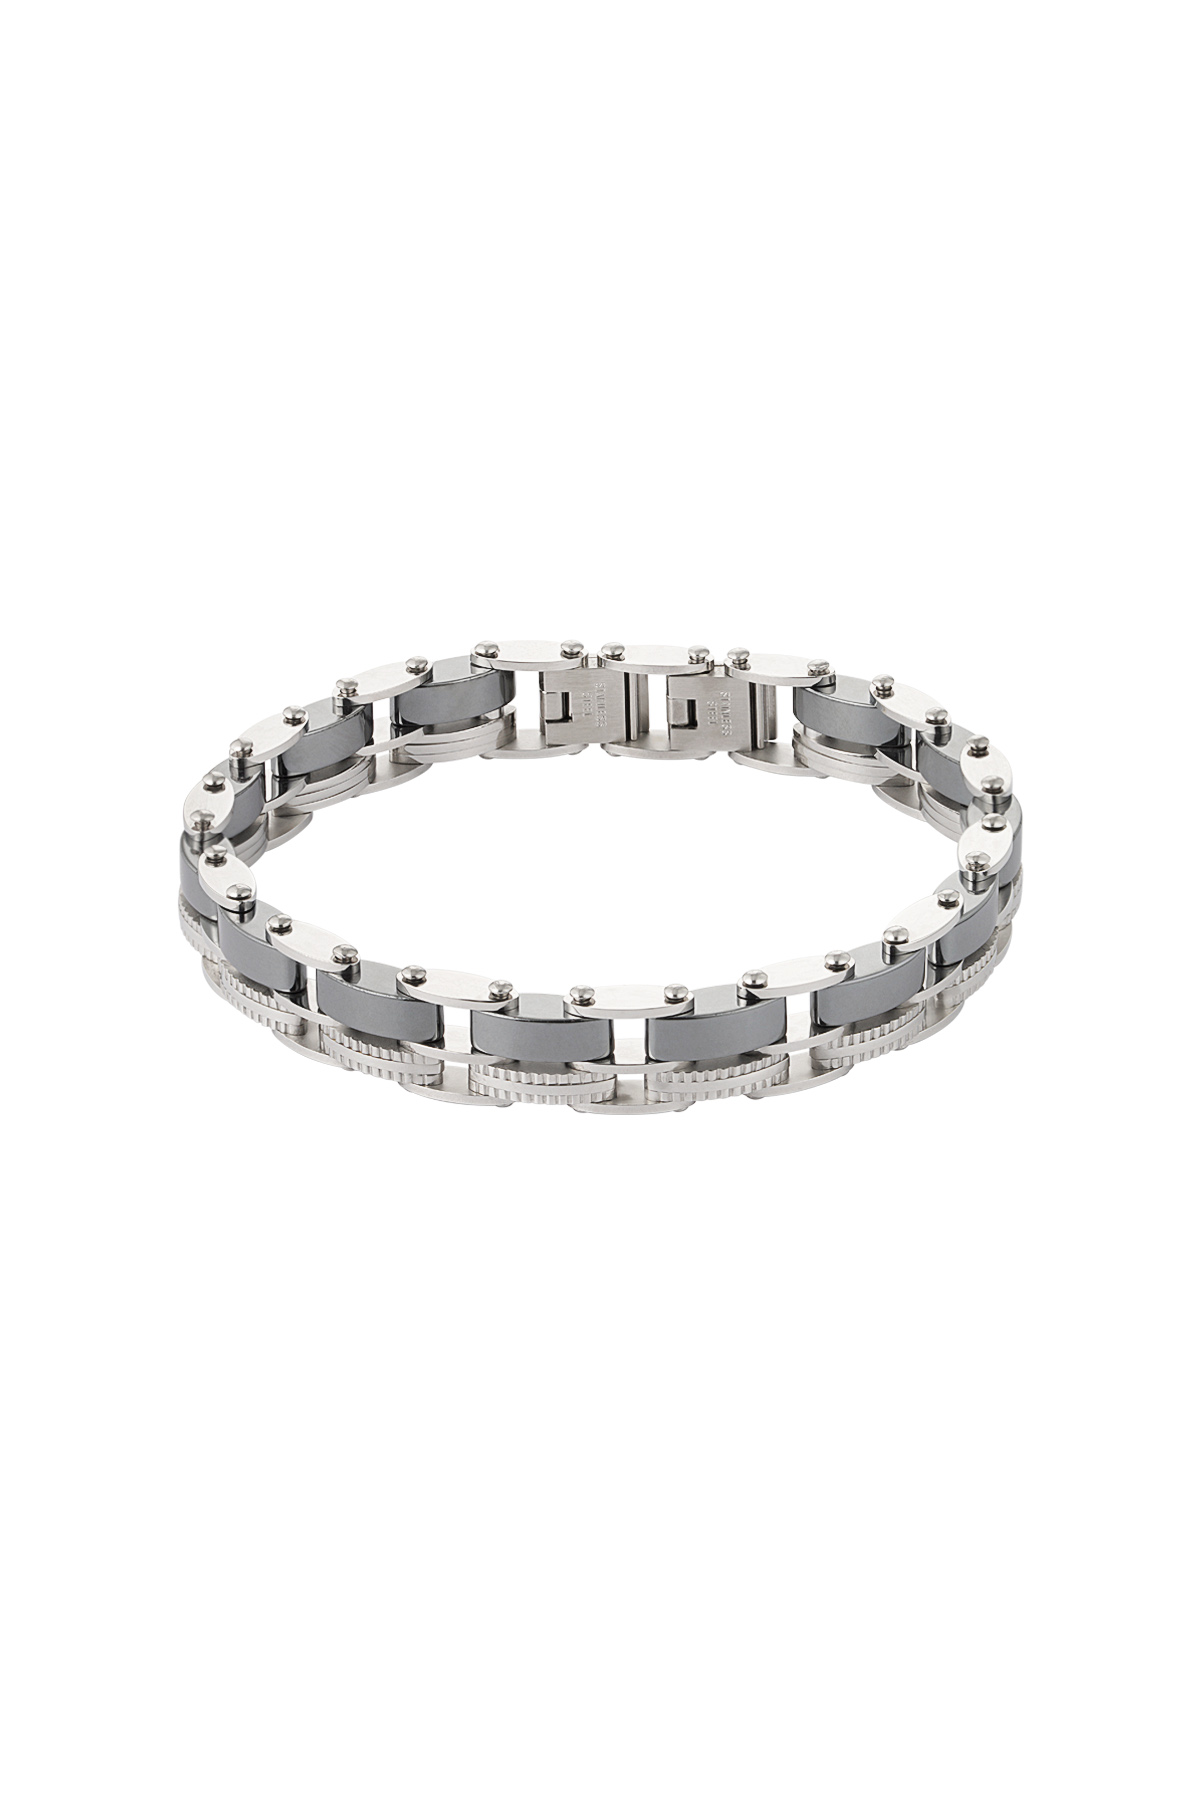 Double-linked men's bracelet - silver h5 